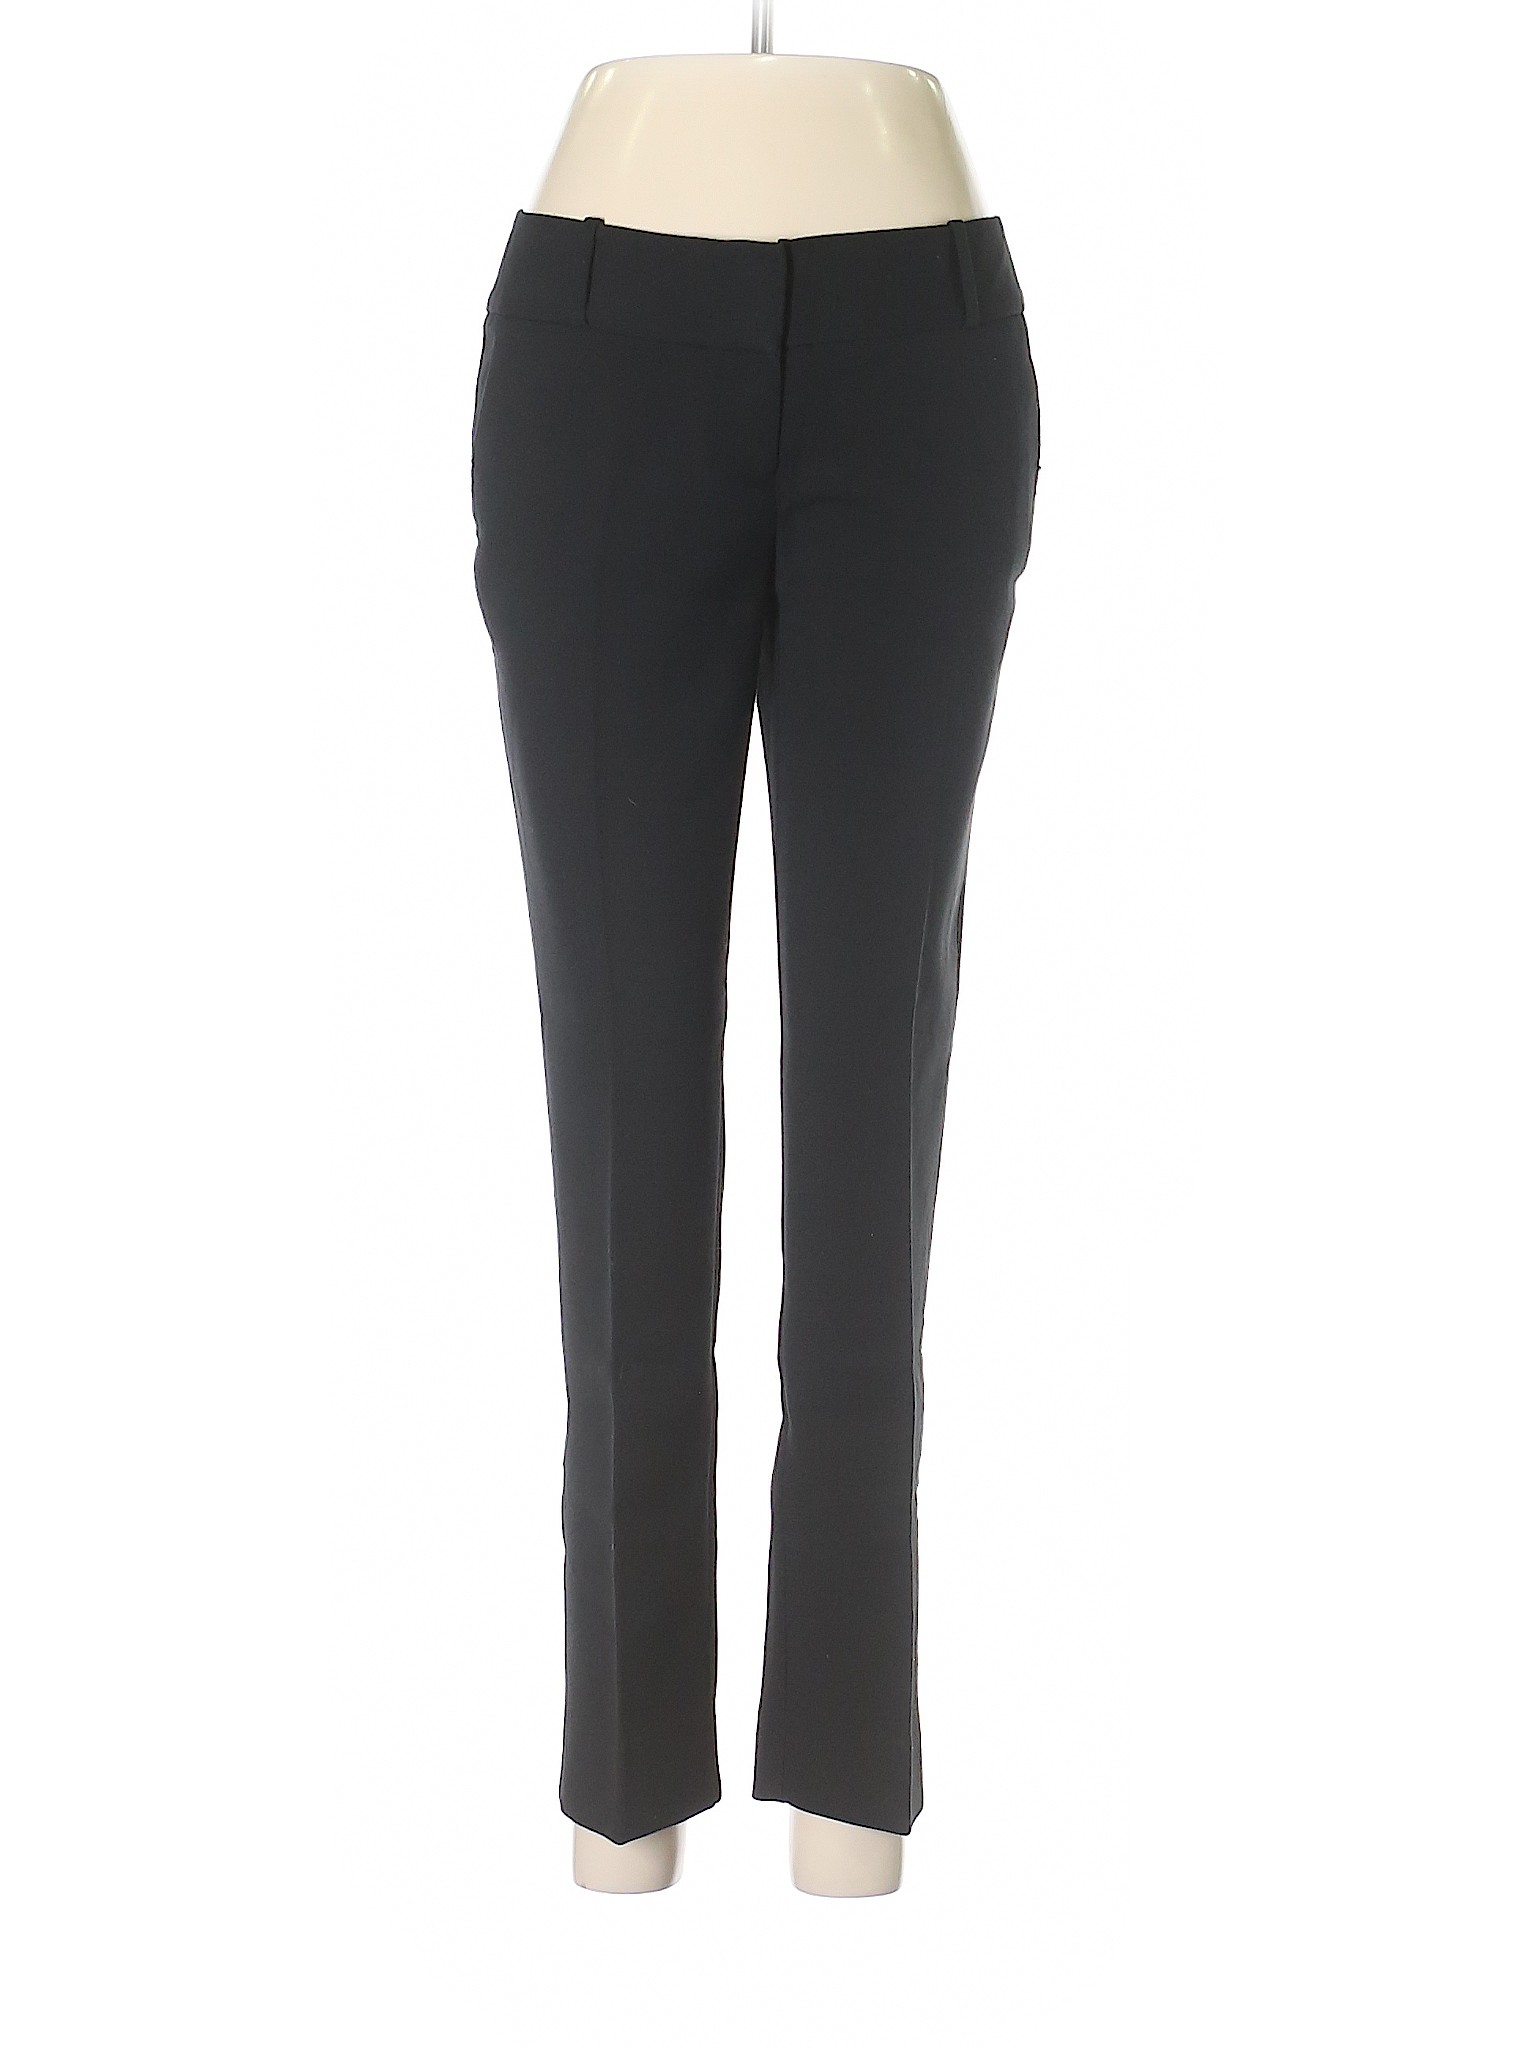 The Limited Women Black Dress Pants 2 | eBay